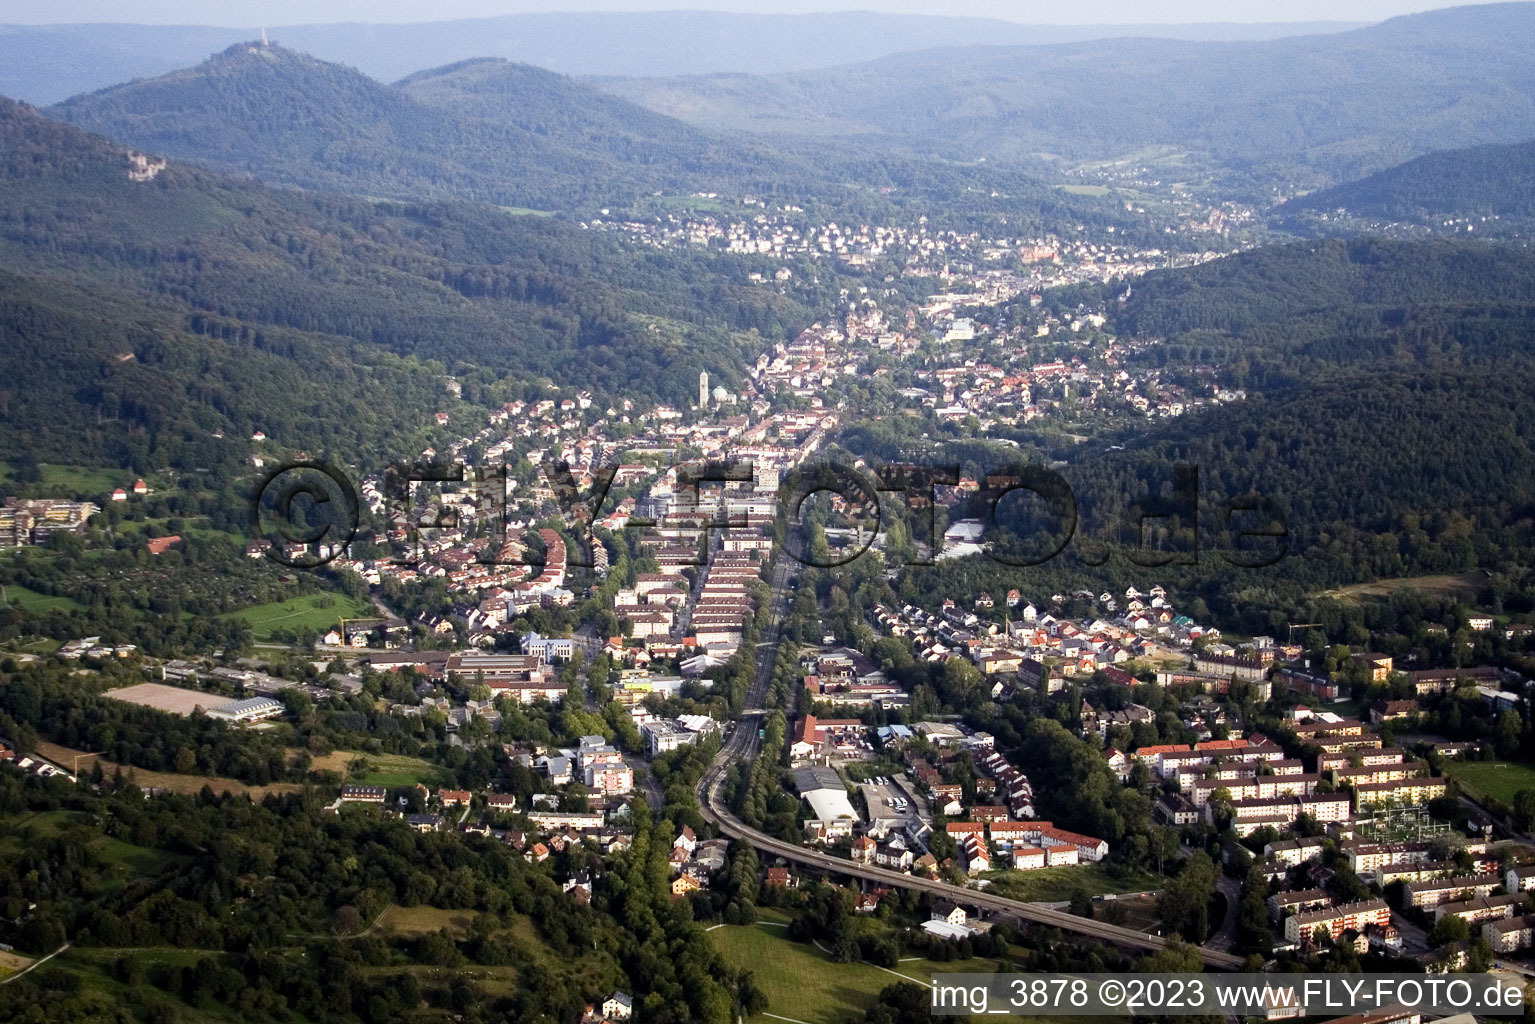 Rheinstr in the district Oos in Baden-Baden in the state Baden-Wuerttemberg, Germany